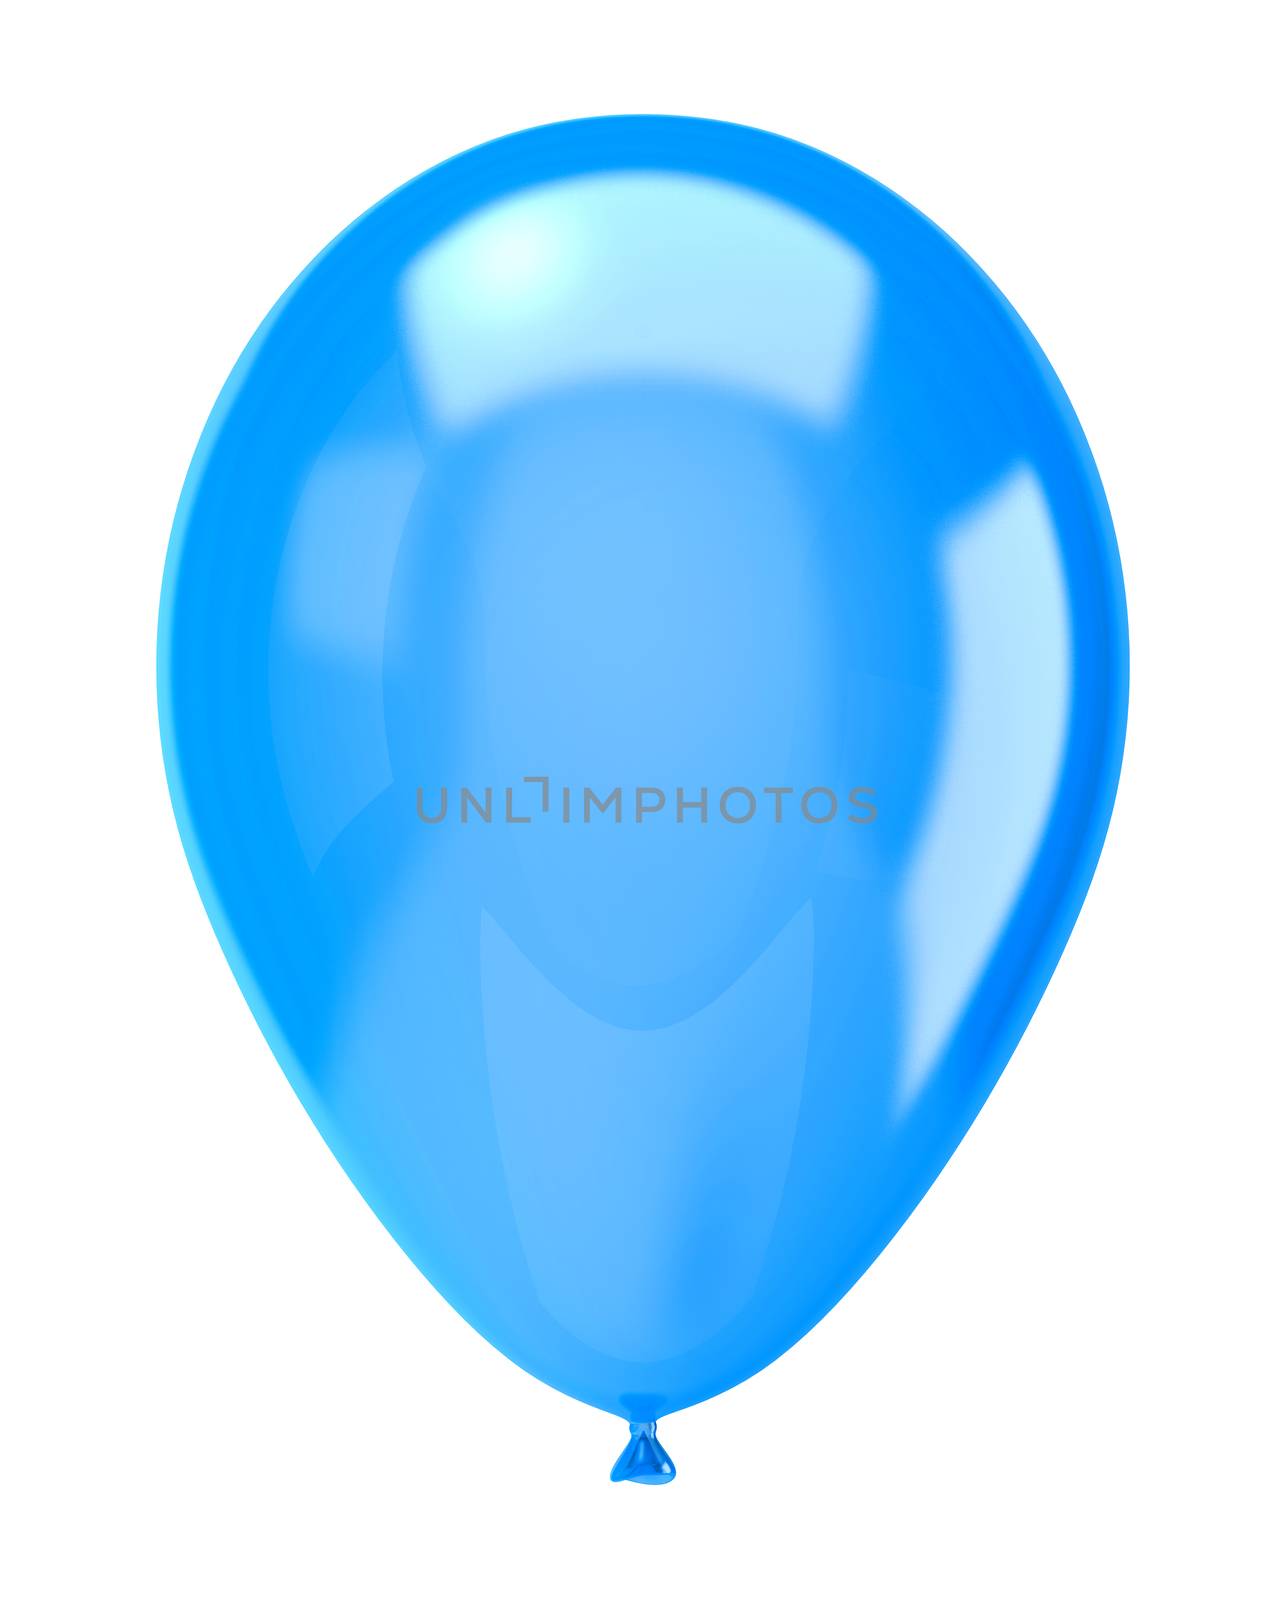 One Single Blue Balloon Isolated on White Background Illustration